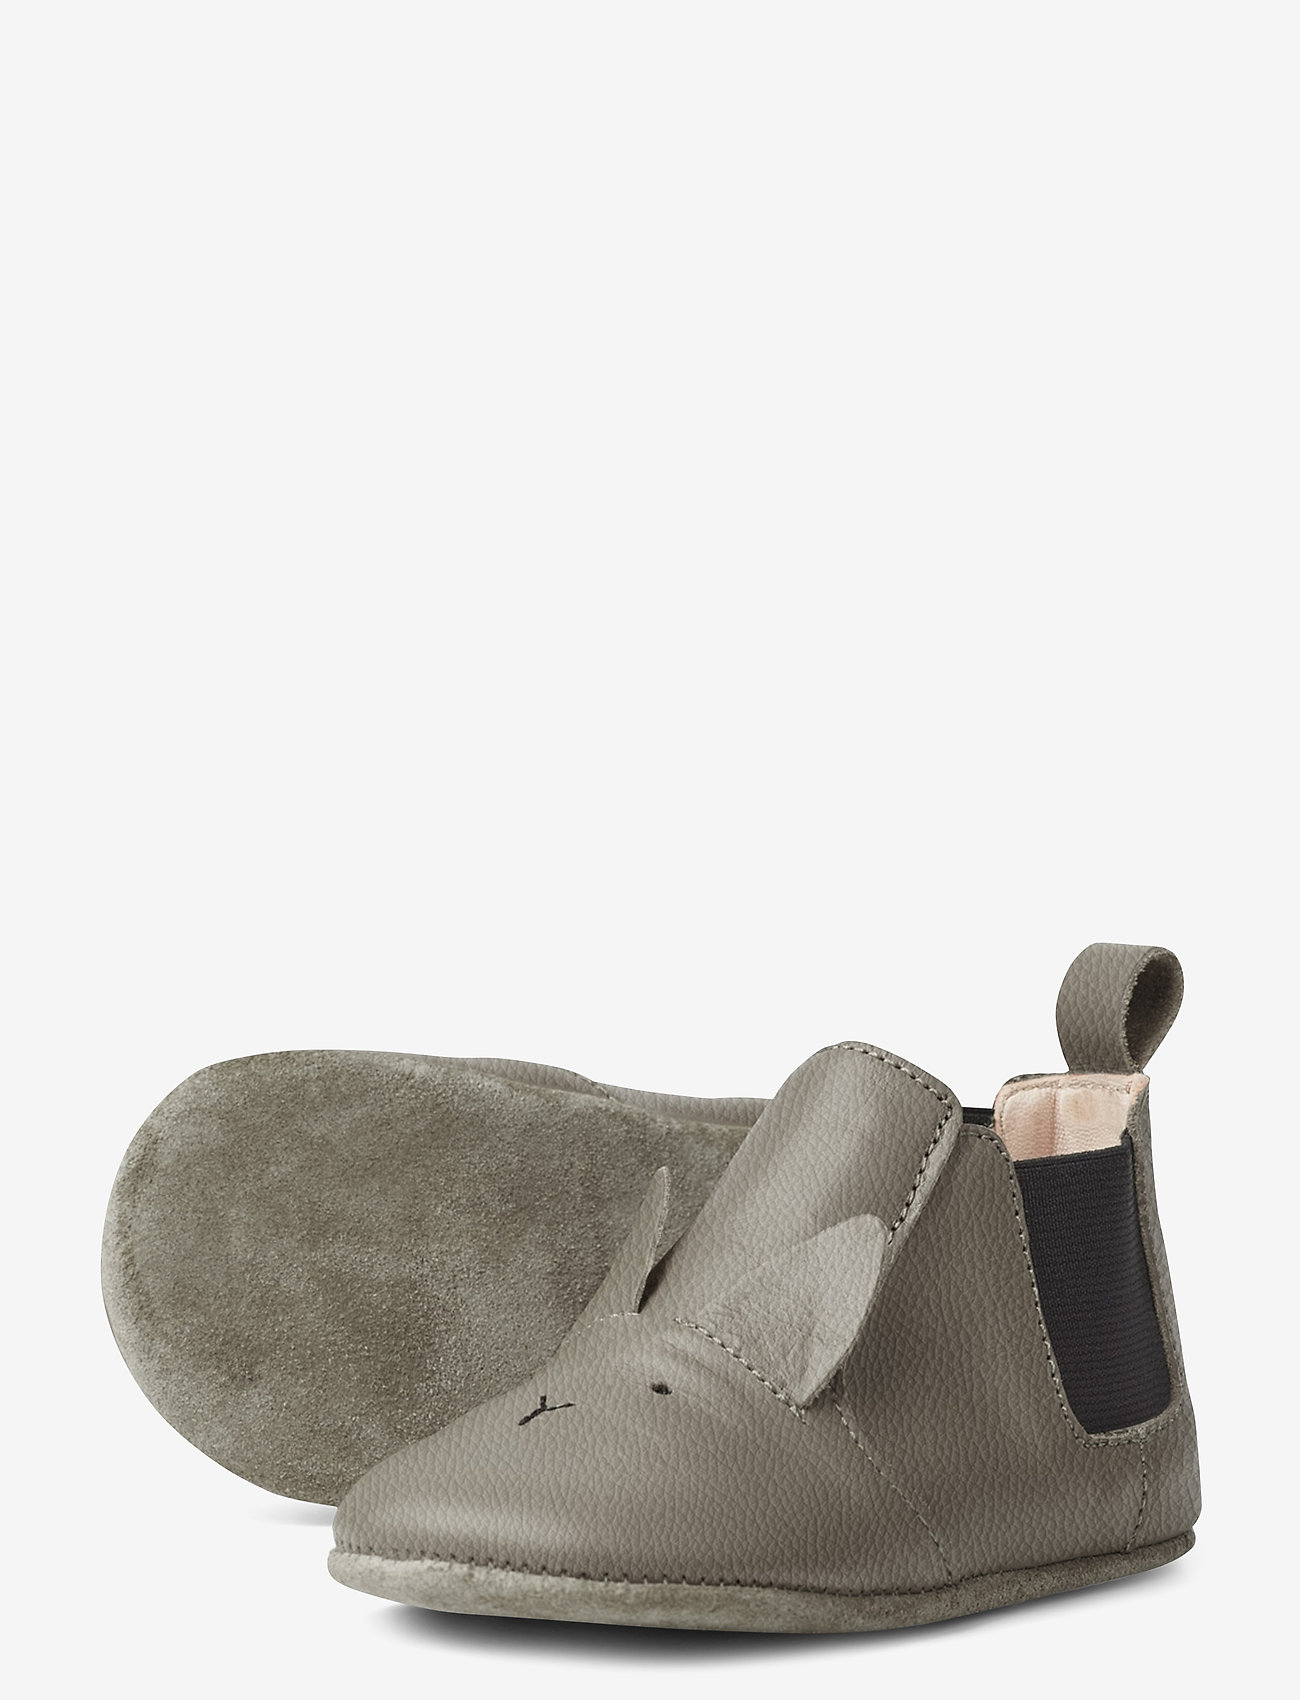 Liewood - Edith leather slippers - kaufen nach alter - rabbit grey - 1